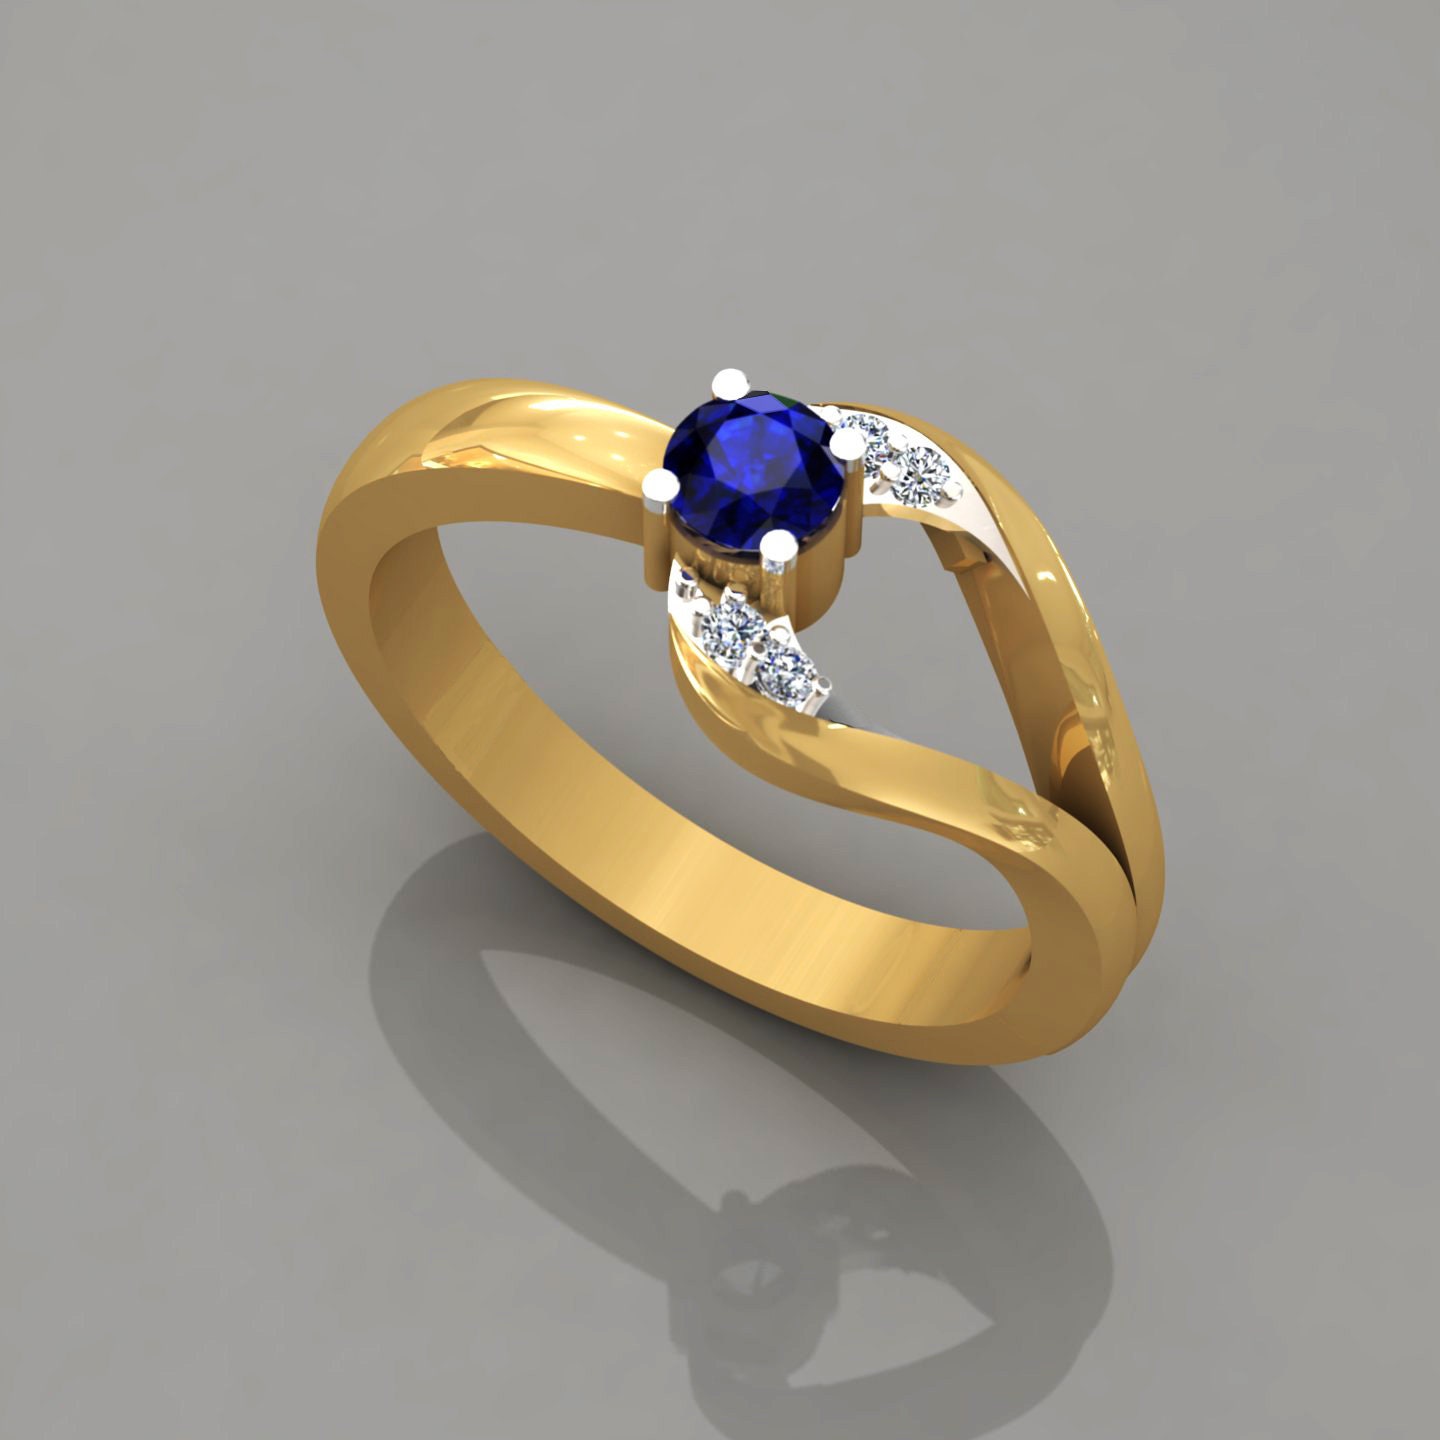 Buy Abhy Round Diamond Engagement Ring Online